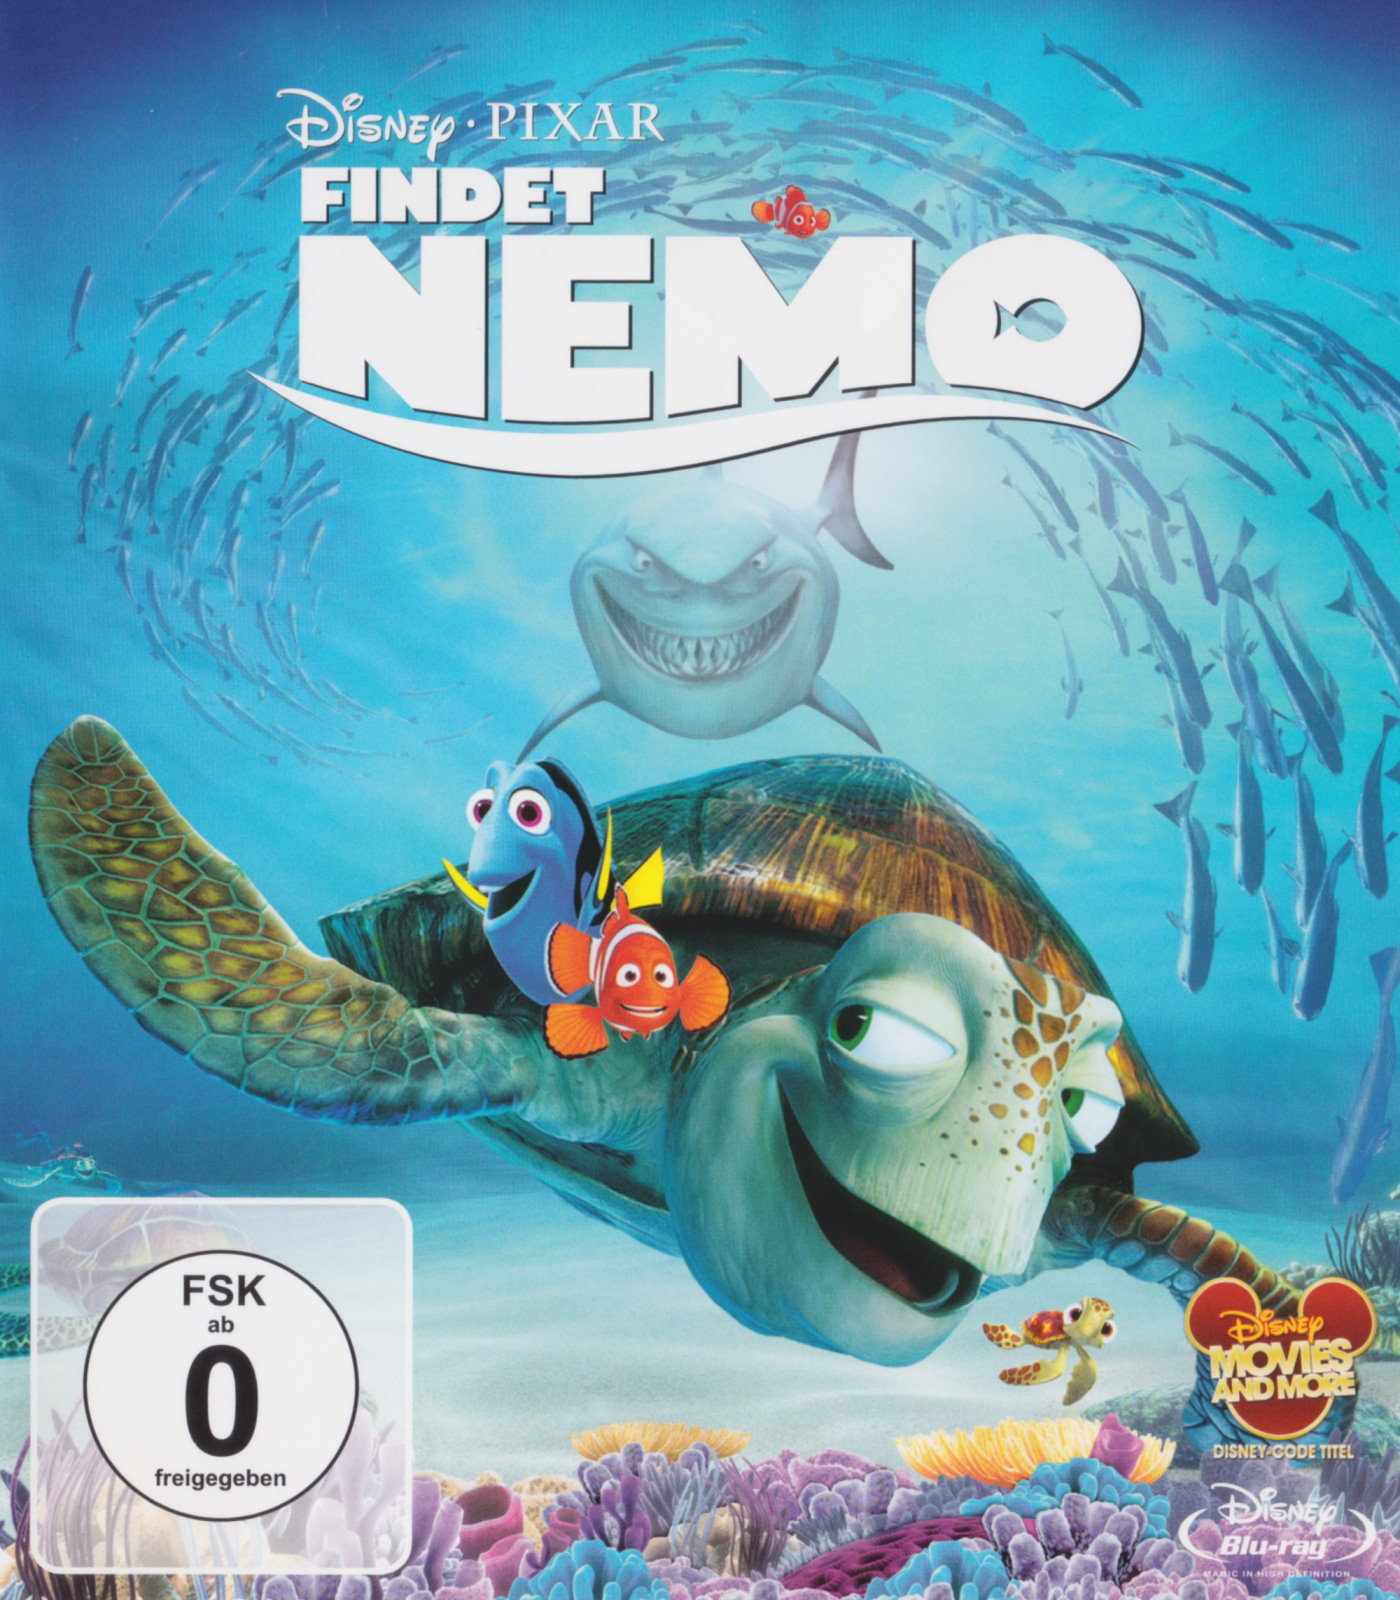 Cover - Findet Nemo.jpg